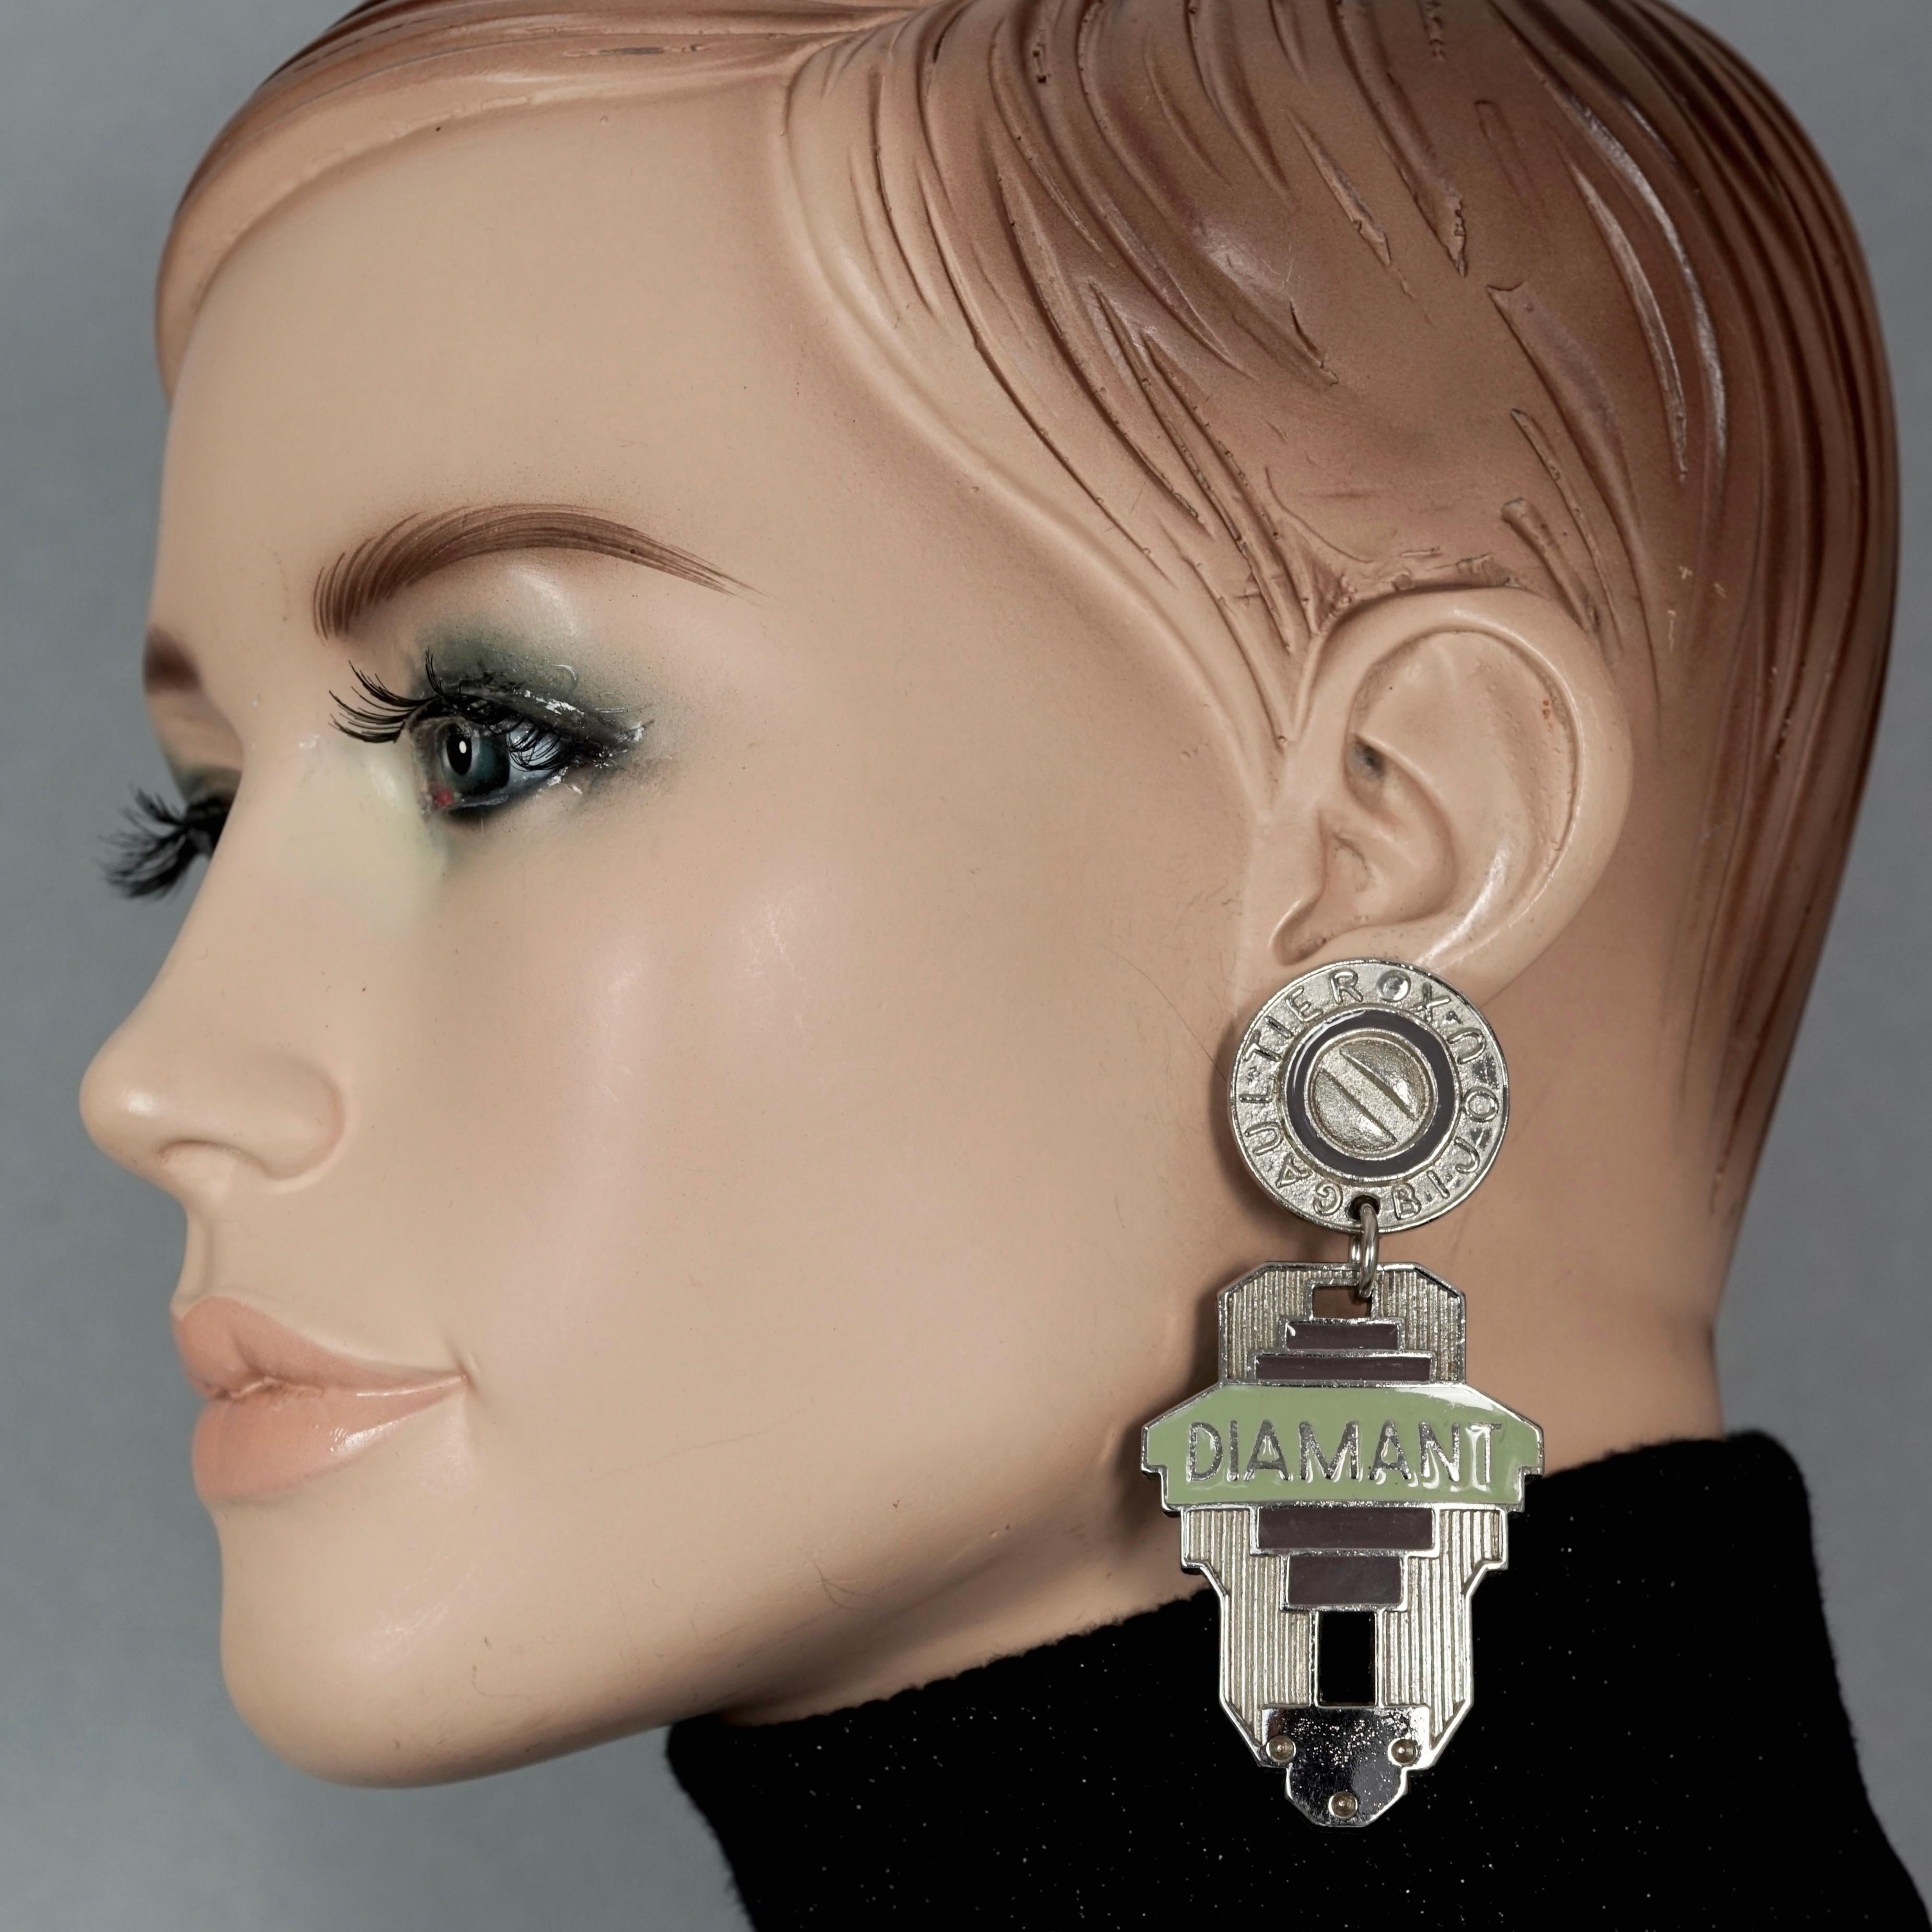 Vintage JEAN PAUL GAULTIER Diamant Bijoux Label Enamel Dangling Earrings

Measurements:
Height: 3.30 inches (8.4 cm)
Width: 1.53 inches (3.9 cm)
Weight per Earring: 30 grams

Features:
- 100% Authentic JEAN PAUL GAULTIER.
- Massive enamel earrings